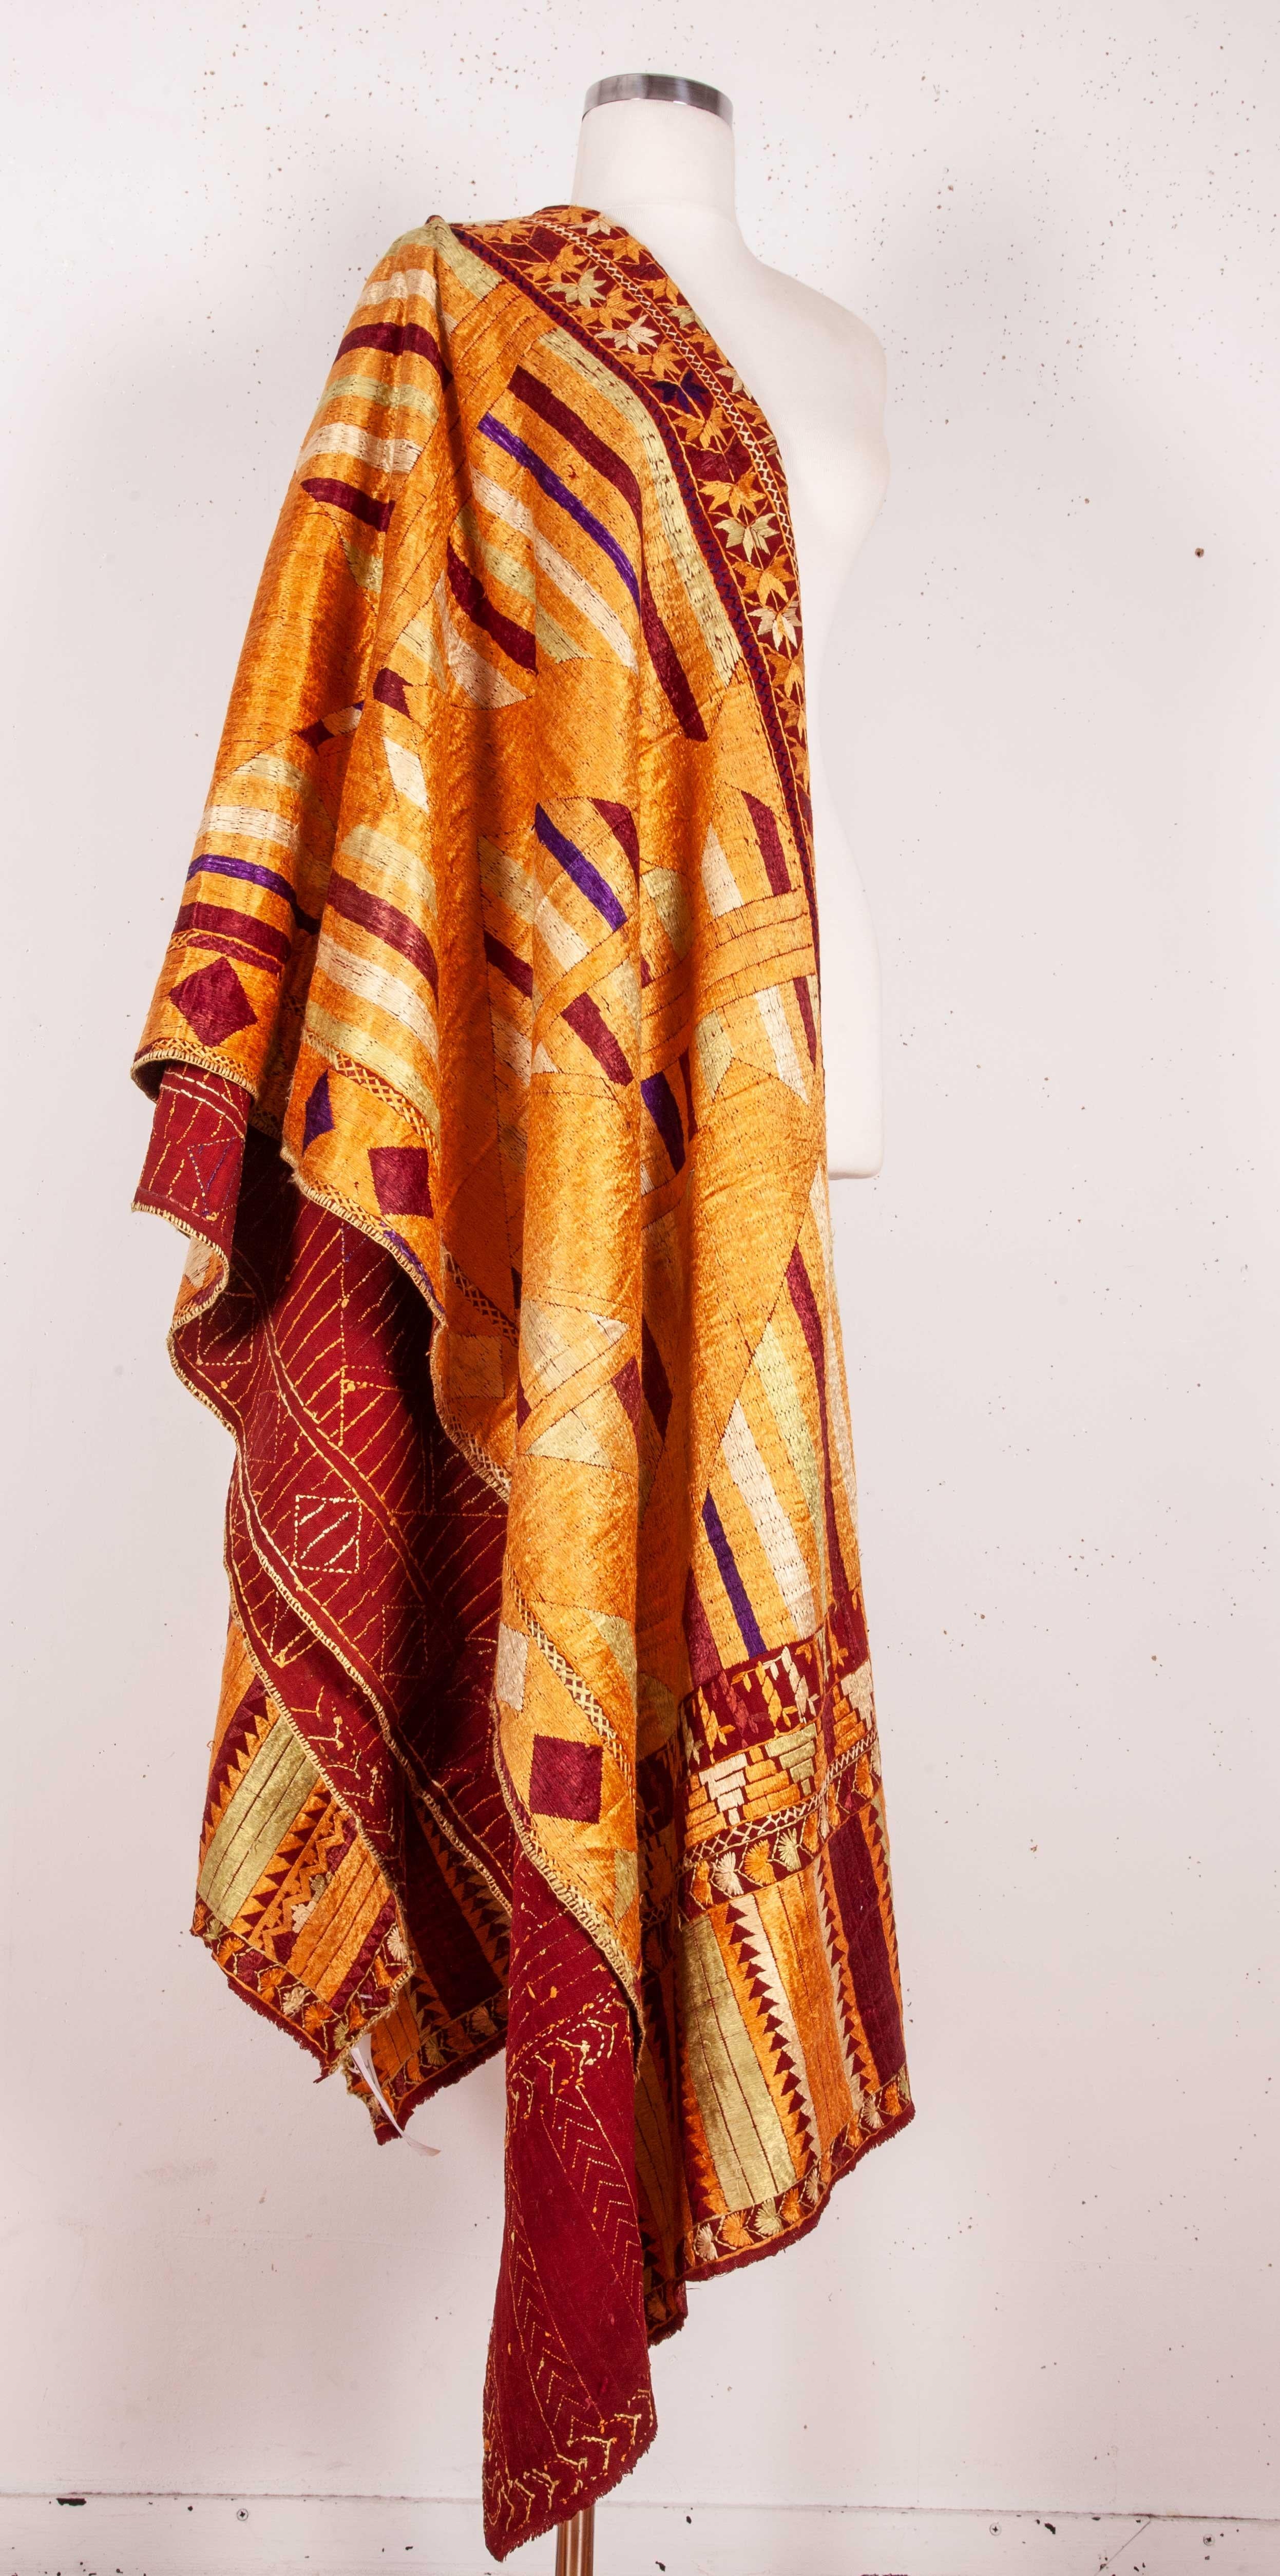 Hand-Woven Phulkari Wedding Shawl, Silk Embroidery on Cotton, Early 20th Century